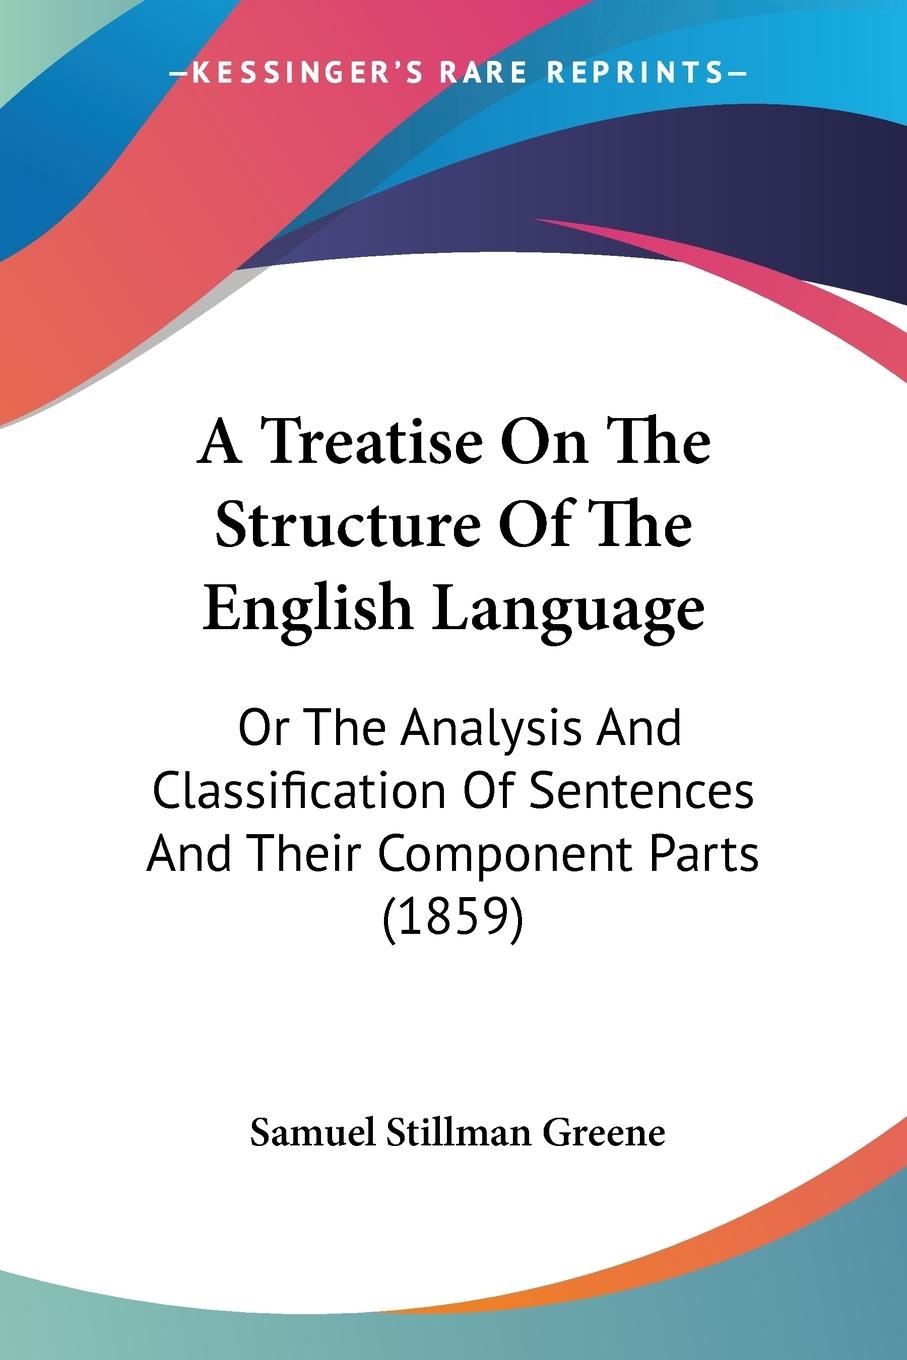 A Treatise On The Structure Of The English Language - Greene, Samuel Stillman